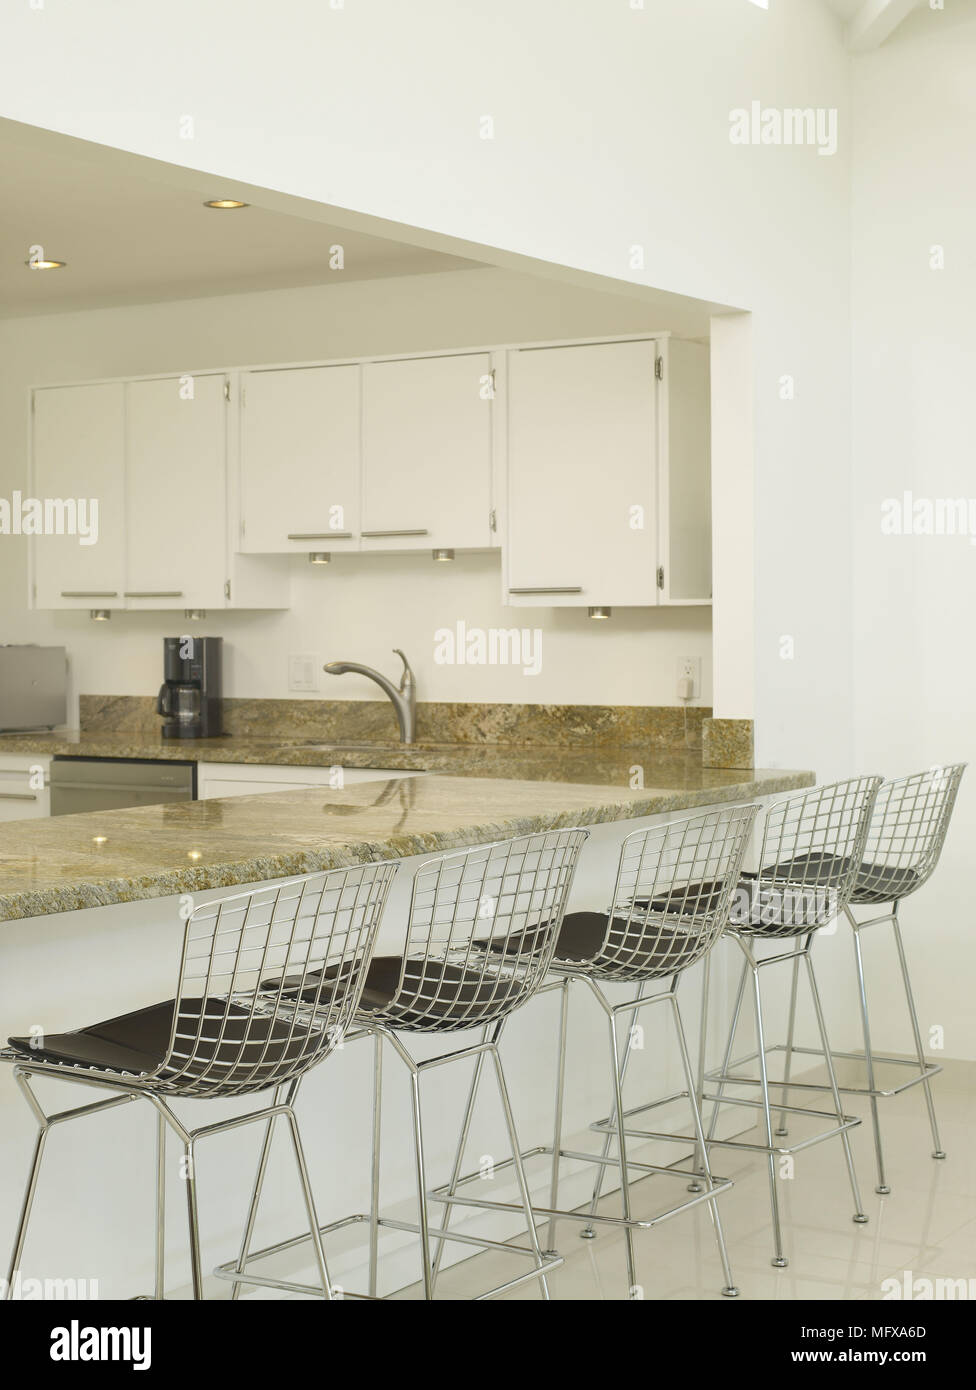 Harry Bertoia wire bar stools at breakfast bar in modern white kitchen  Stock Photo - Alamy